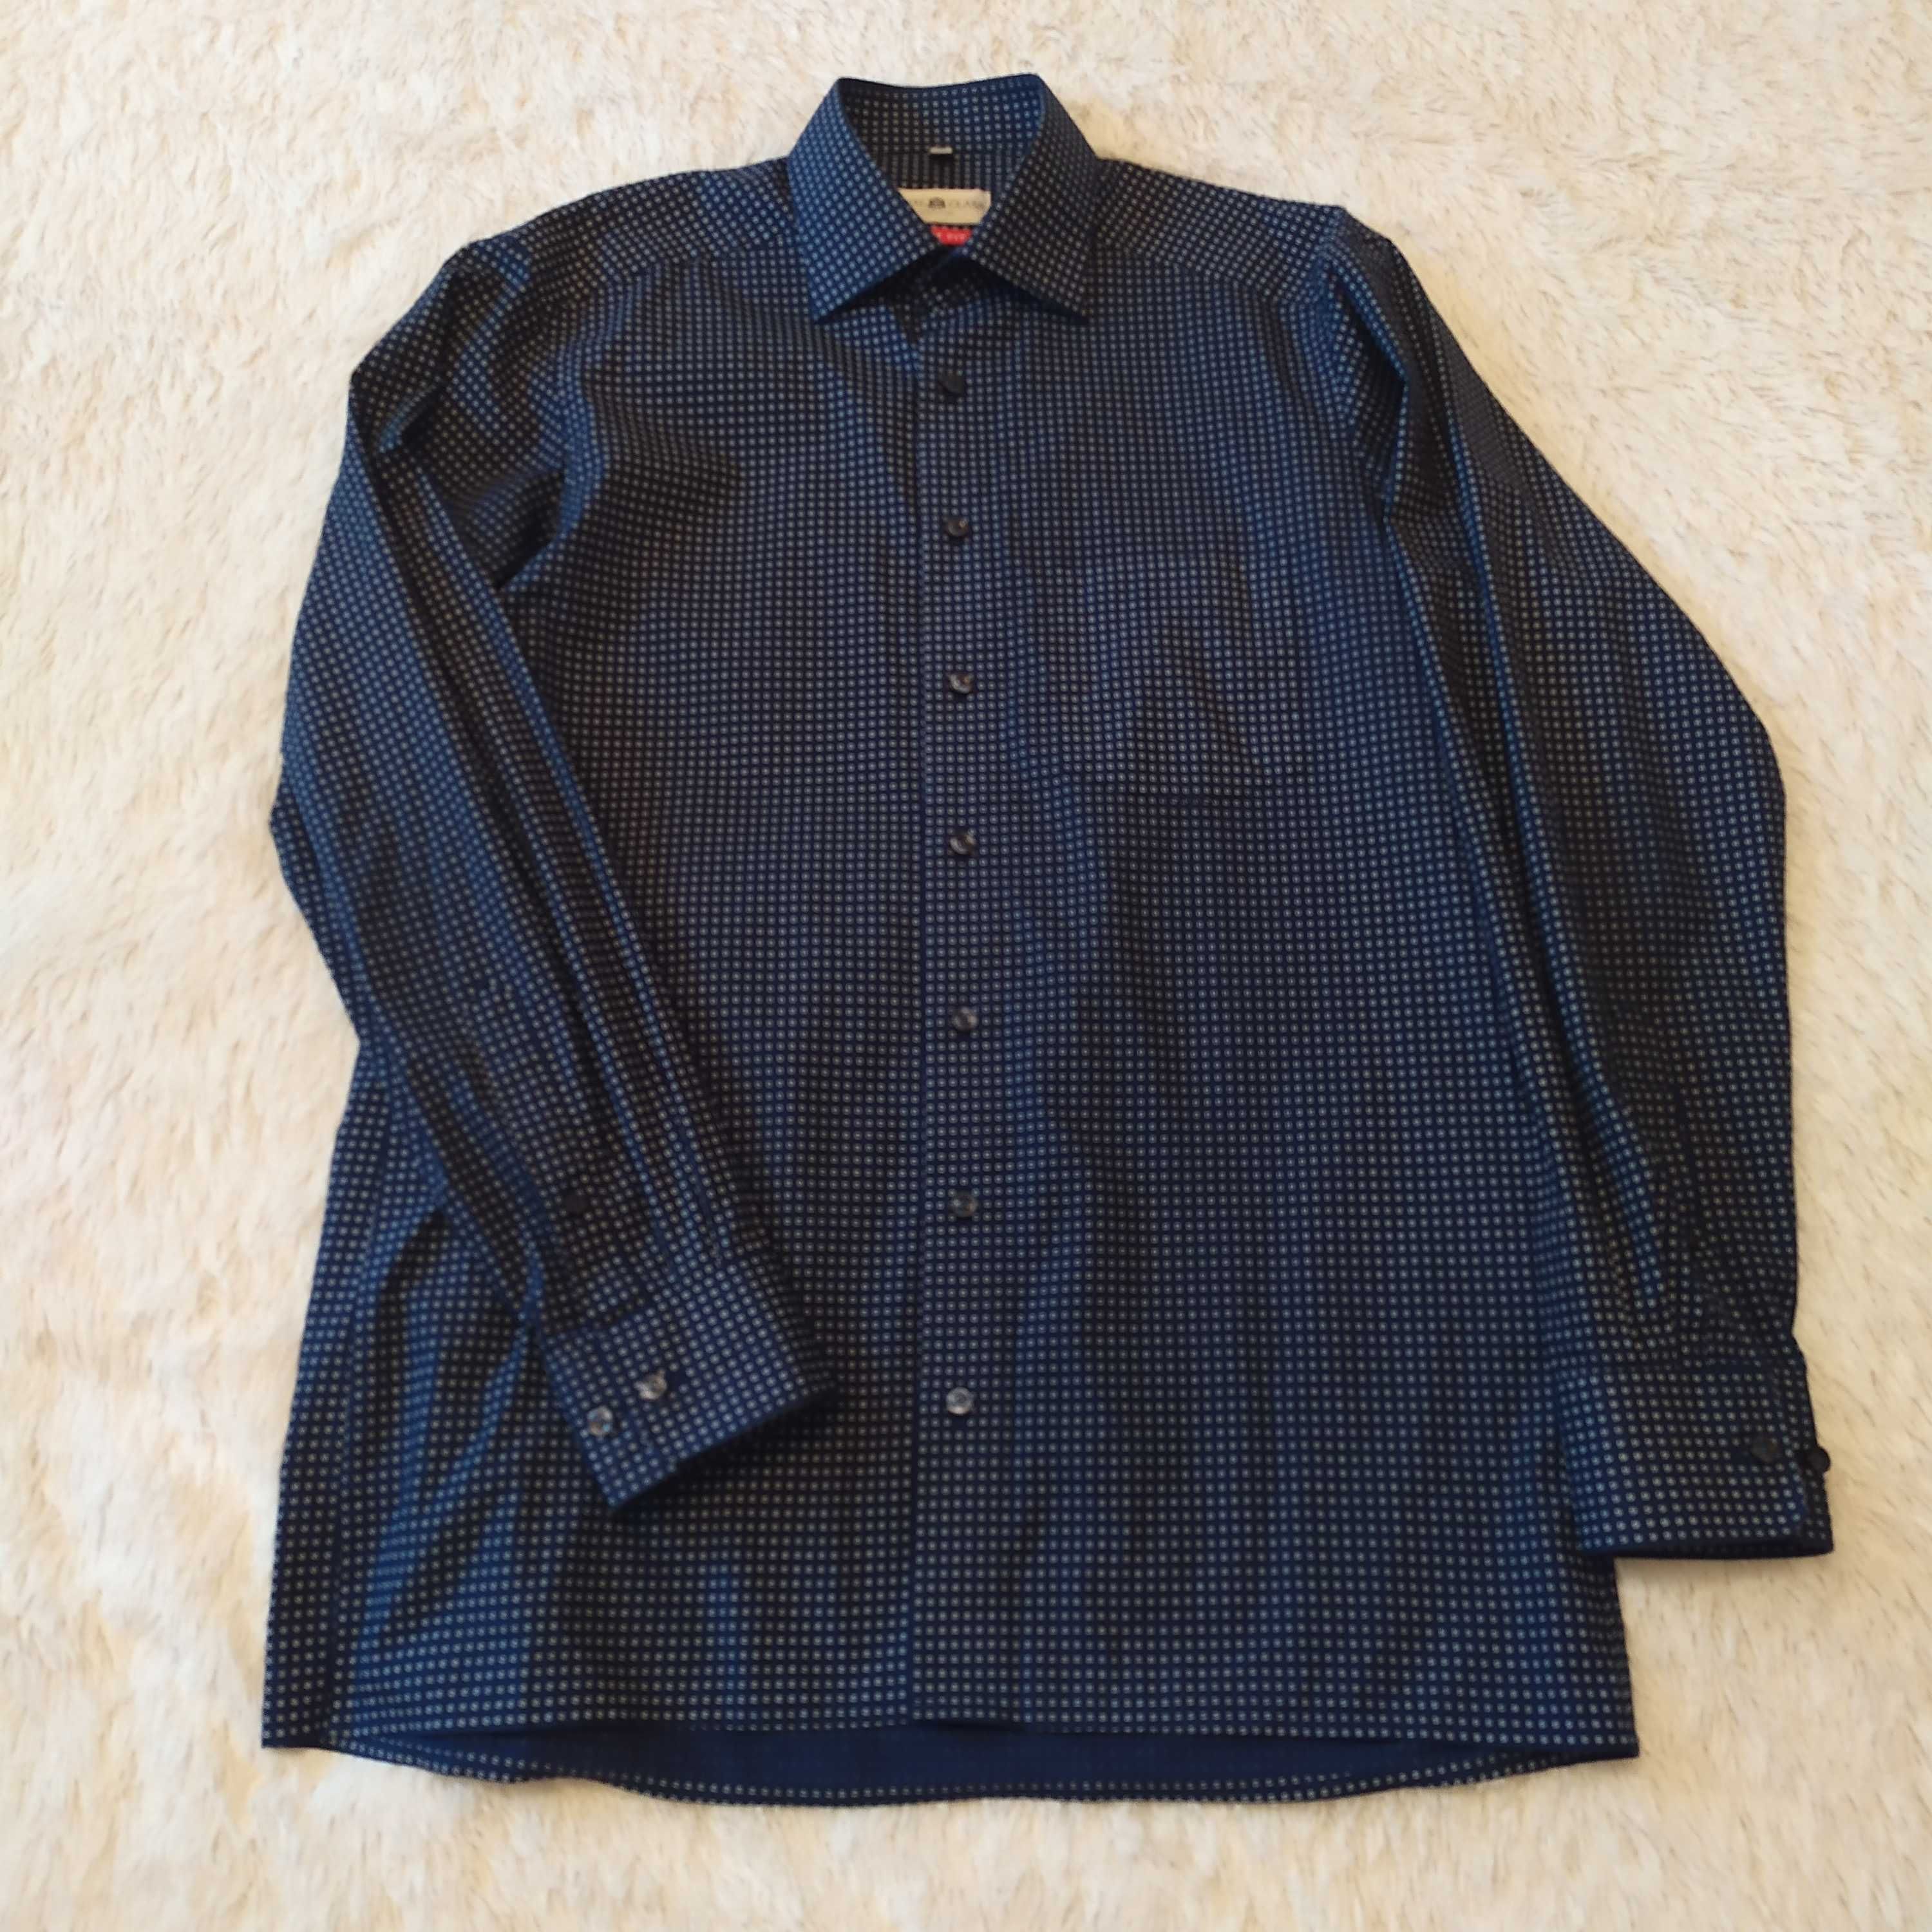 Рубашка мужская синяя ROYAL CLASS М967